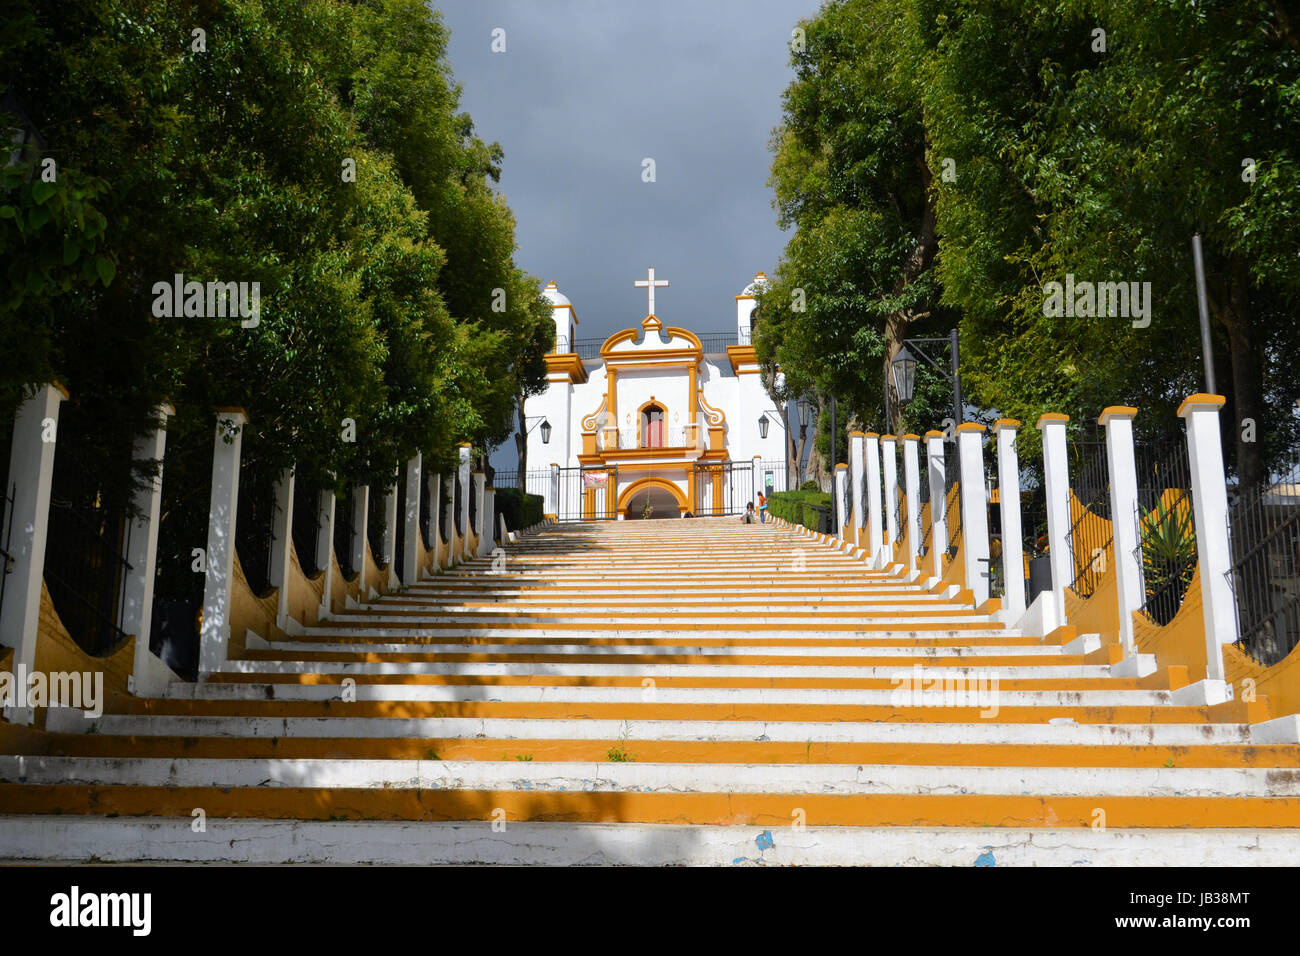 A Christian Catholic chapel on a hill with colorful steps in San Cristobal de las Casas, Chiapas, Mexico Stock Photo